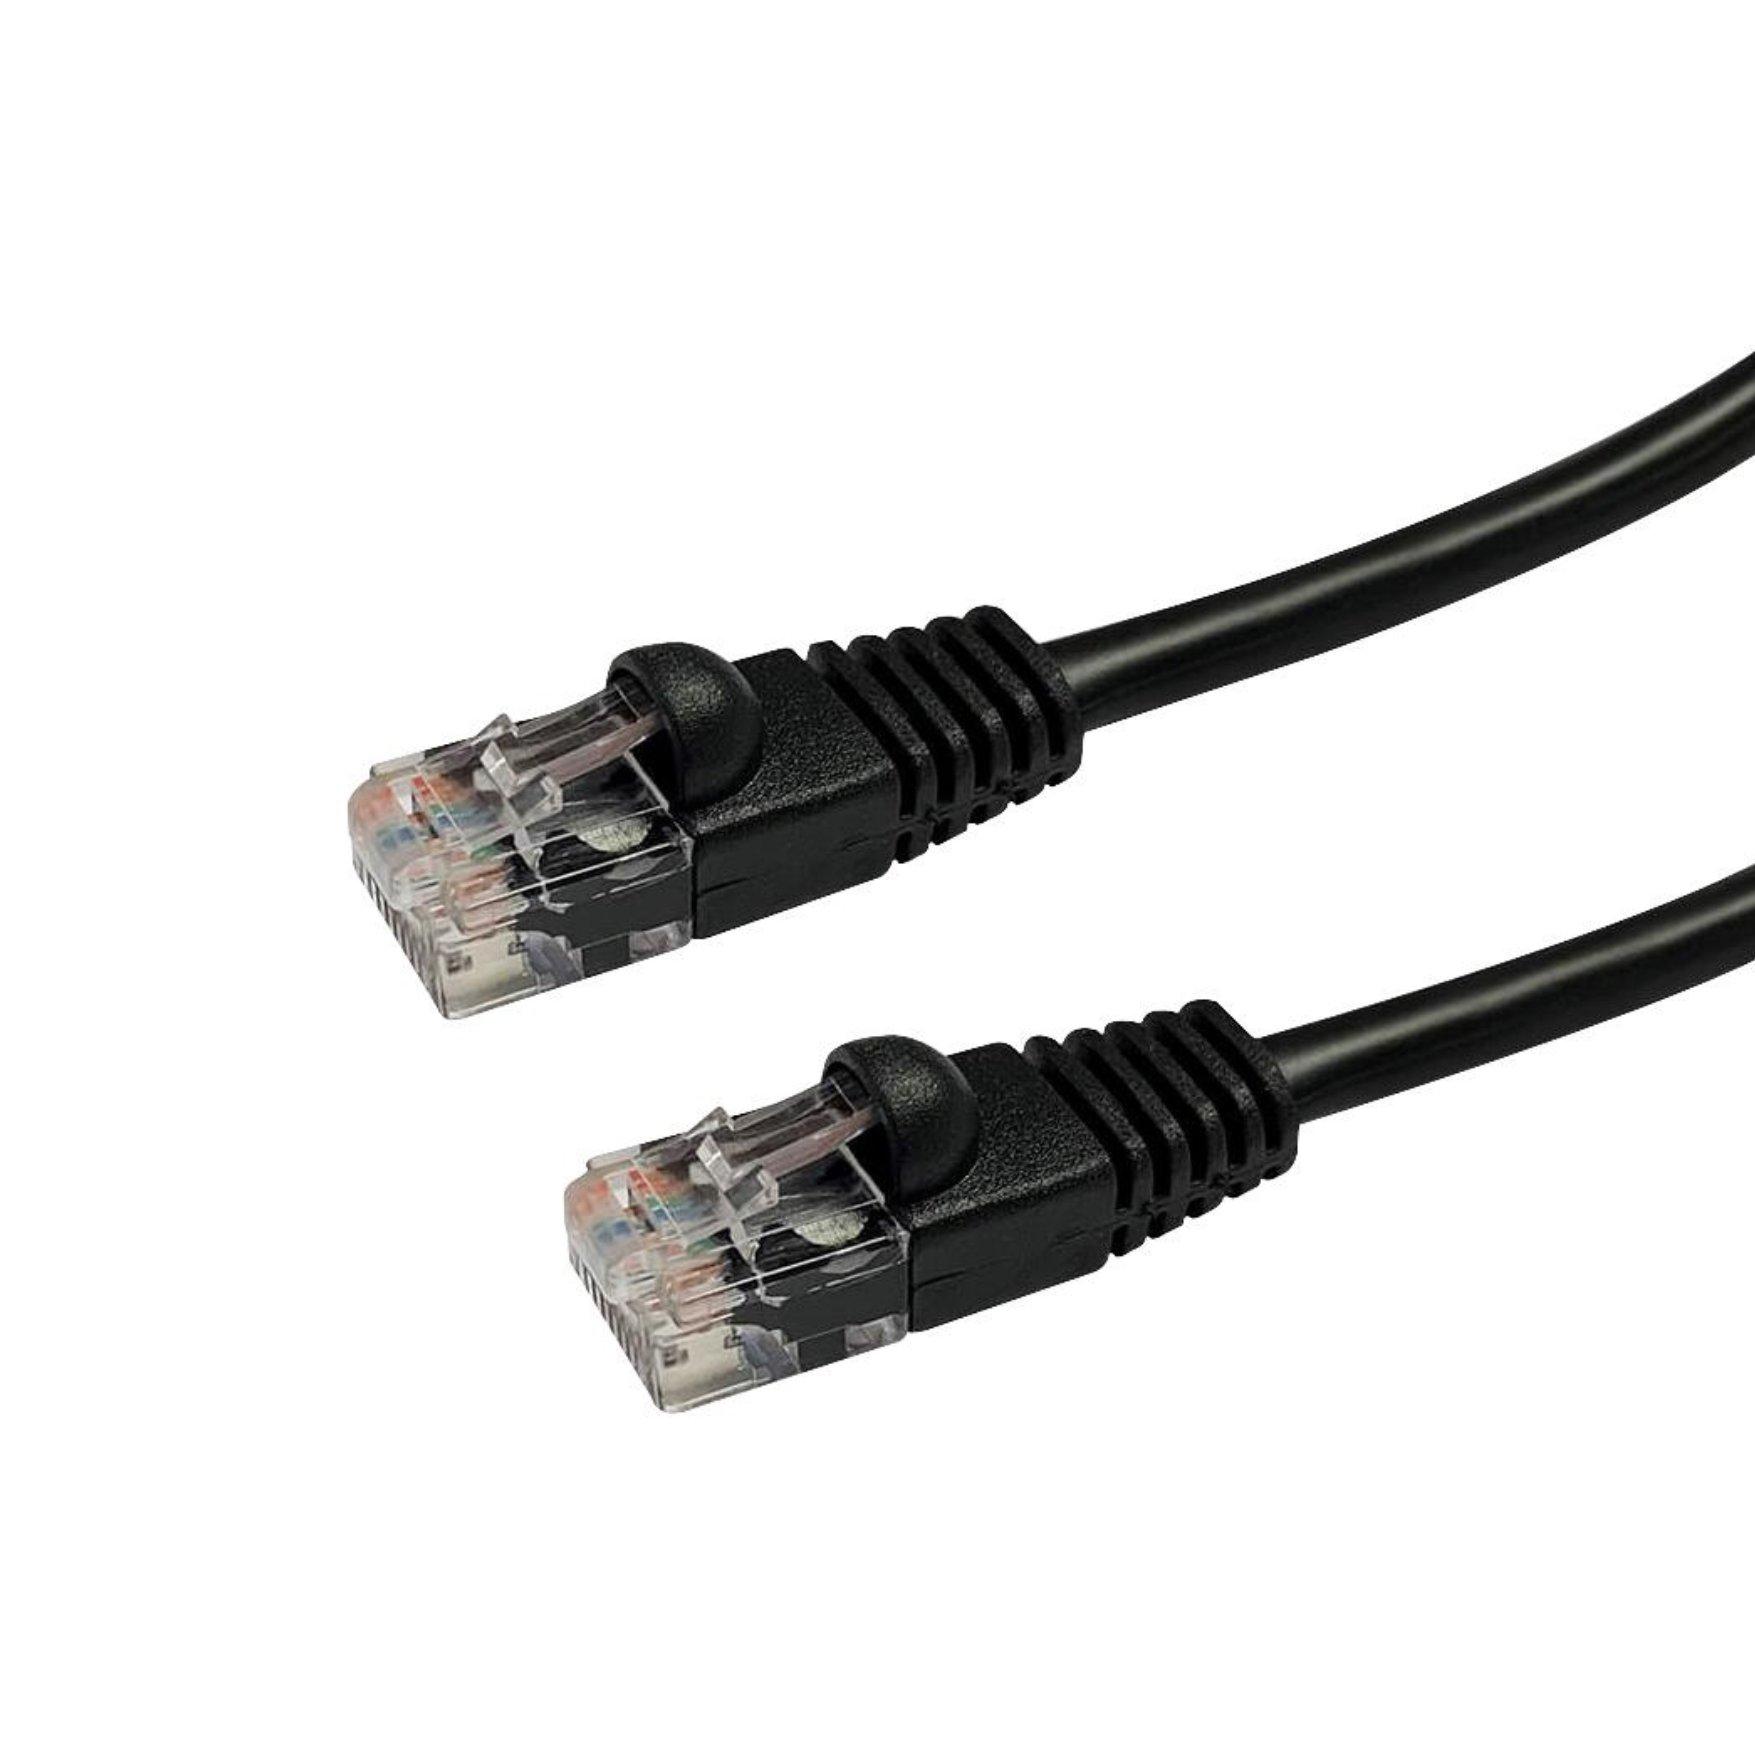 netxl.com/yay-yay.com-cat5-black-5-cat5-ethernet-cable-10